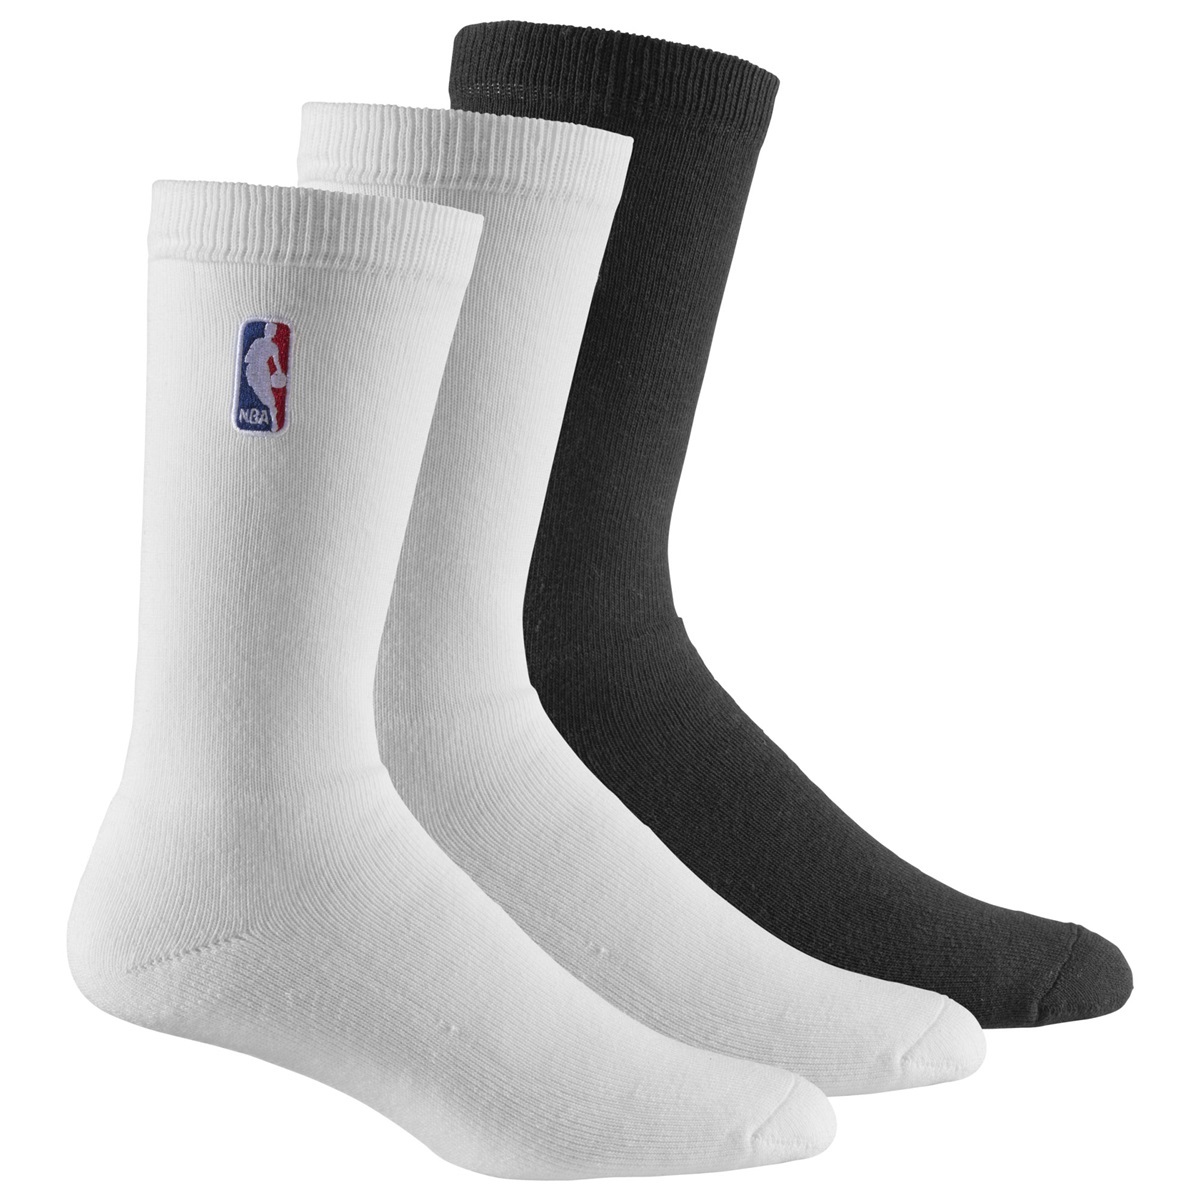 Adidas Calcetines Sock (blanco/negro)